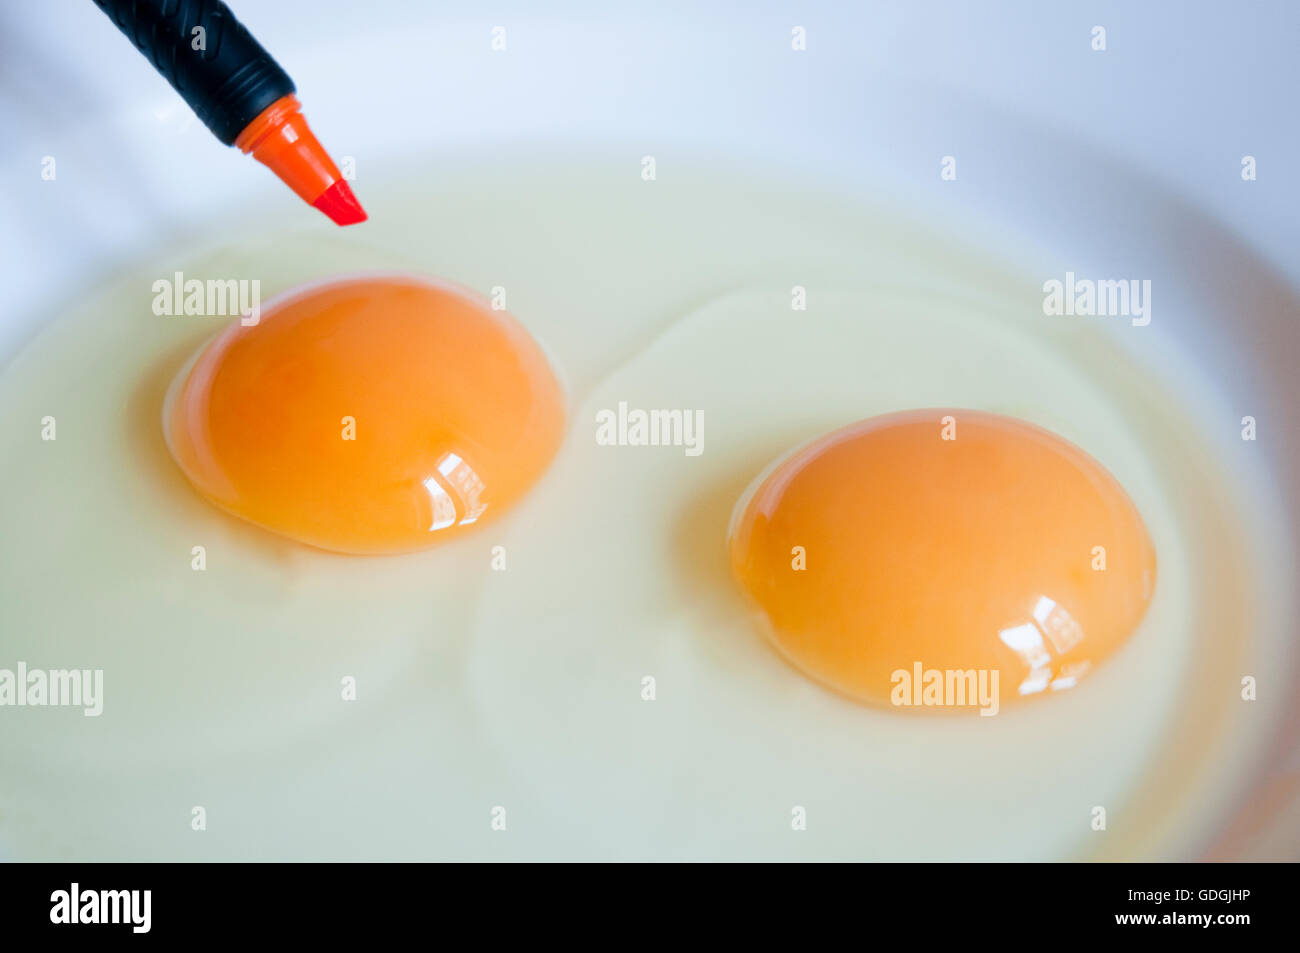 Two eggs and orange felt-tip pen. Close view. Stock Photo